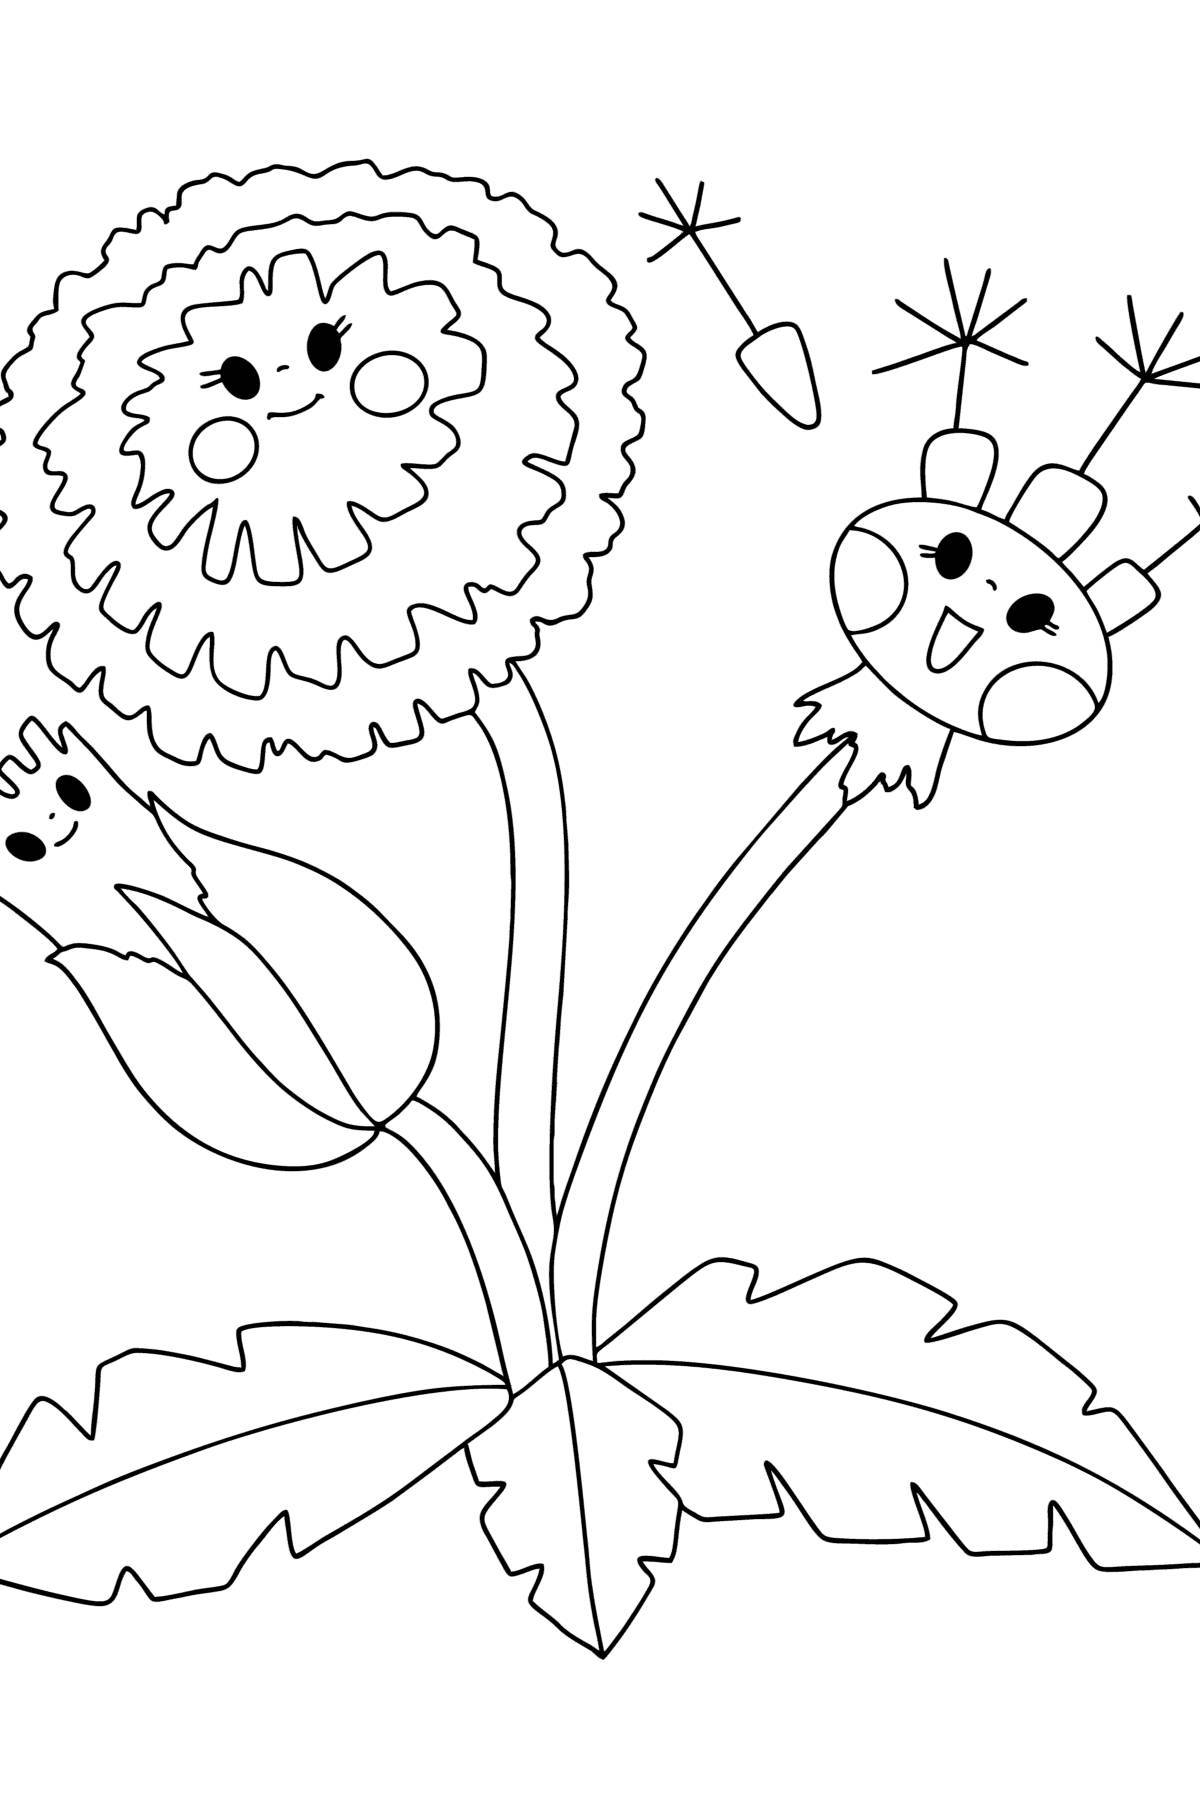 Coloring page joyful dandelion